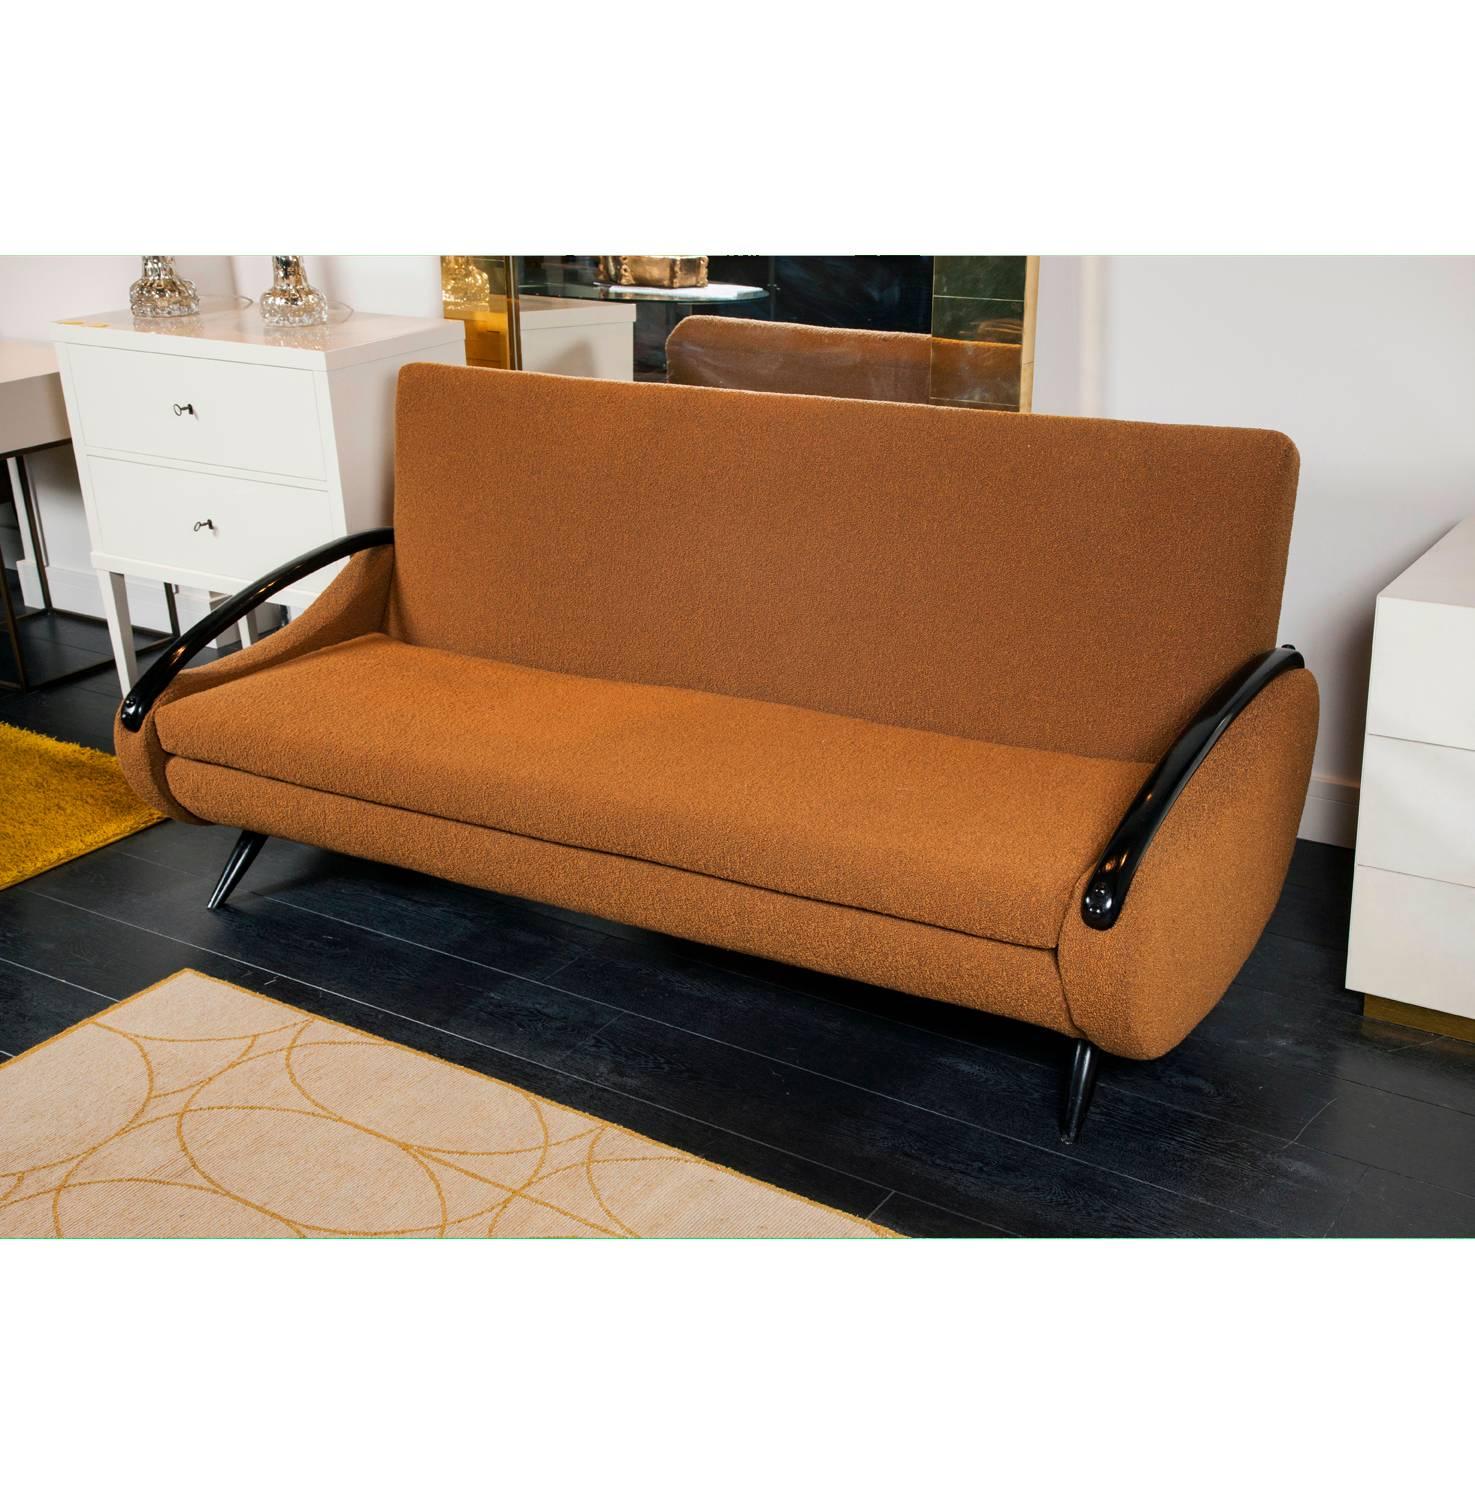 1940s style sofa